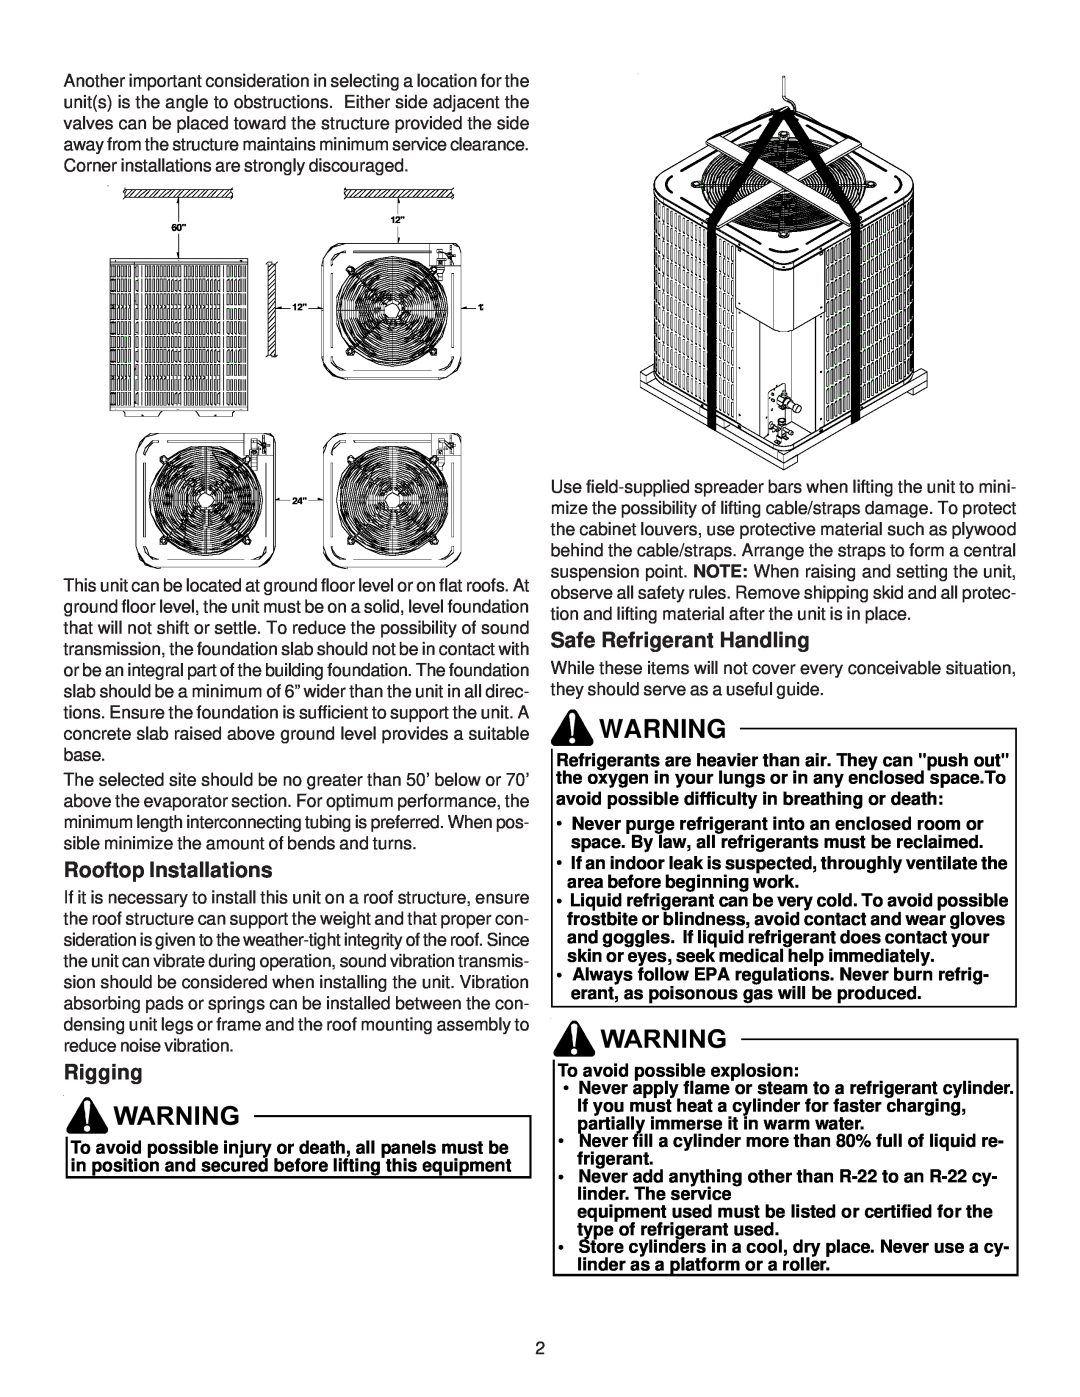 Goodman Mfg IO-402G important safety instructions Rigging, Rooftop Installations, Safe Refrigerant Handling 